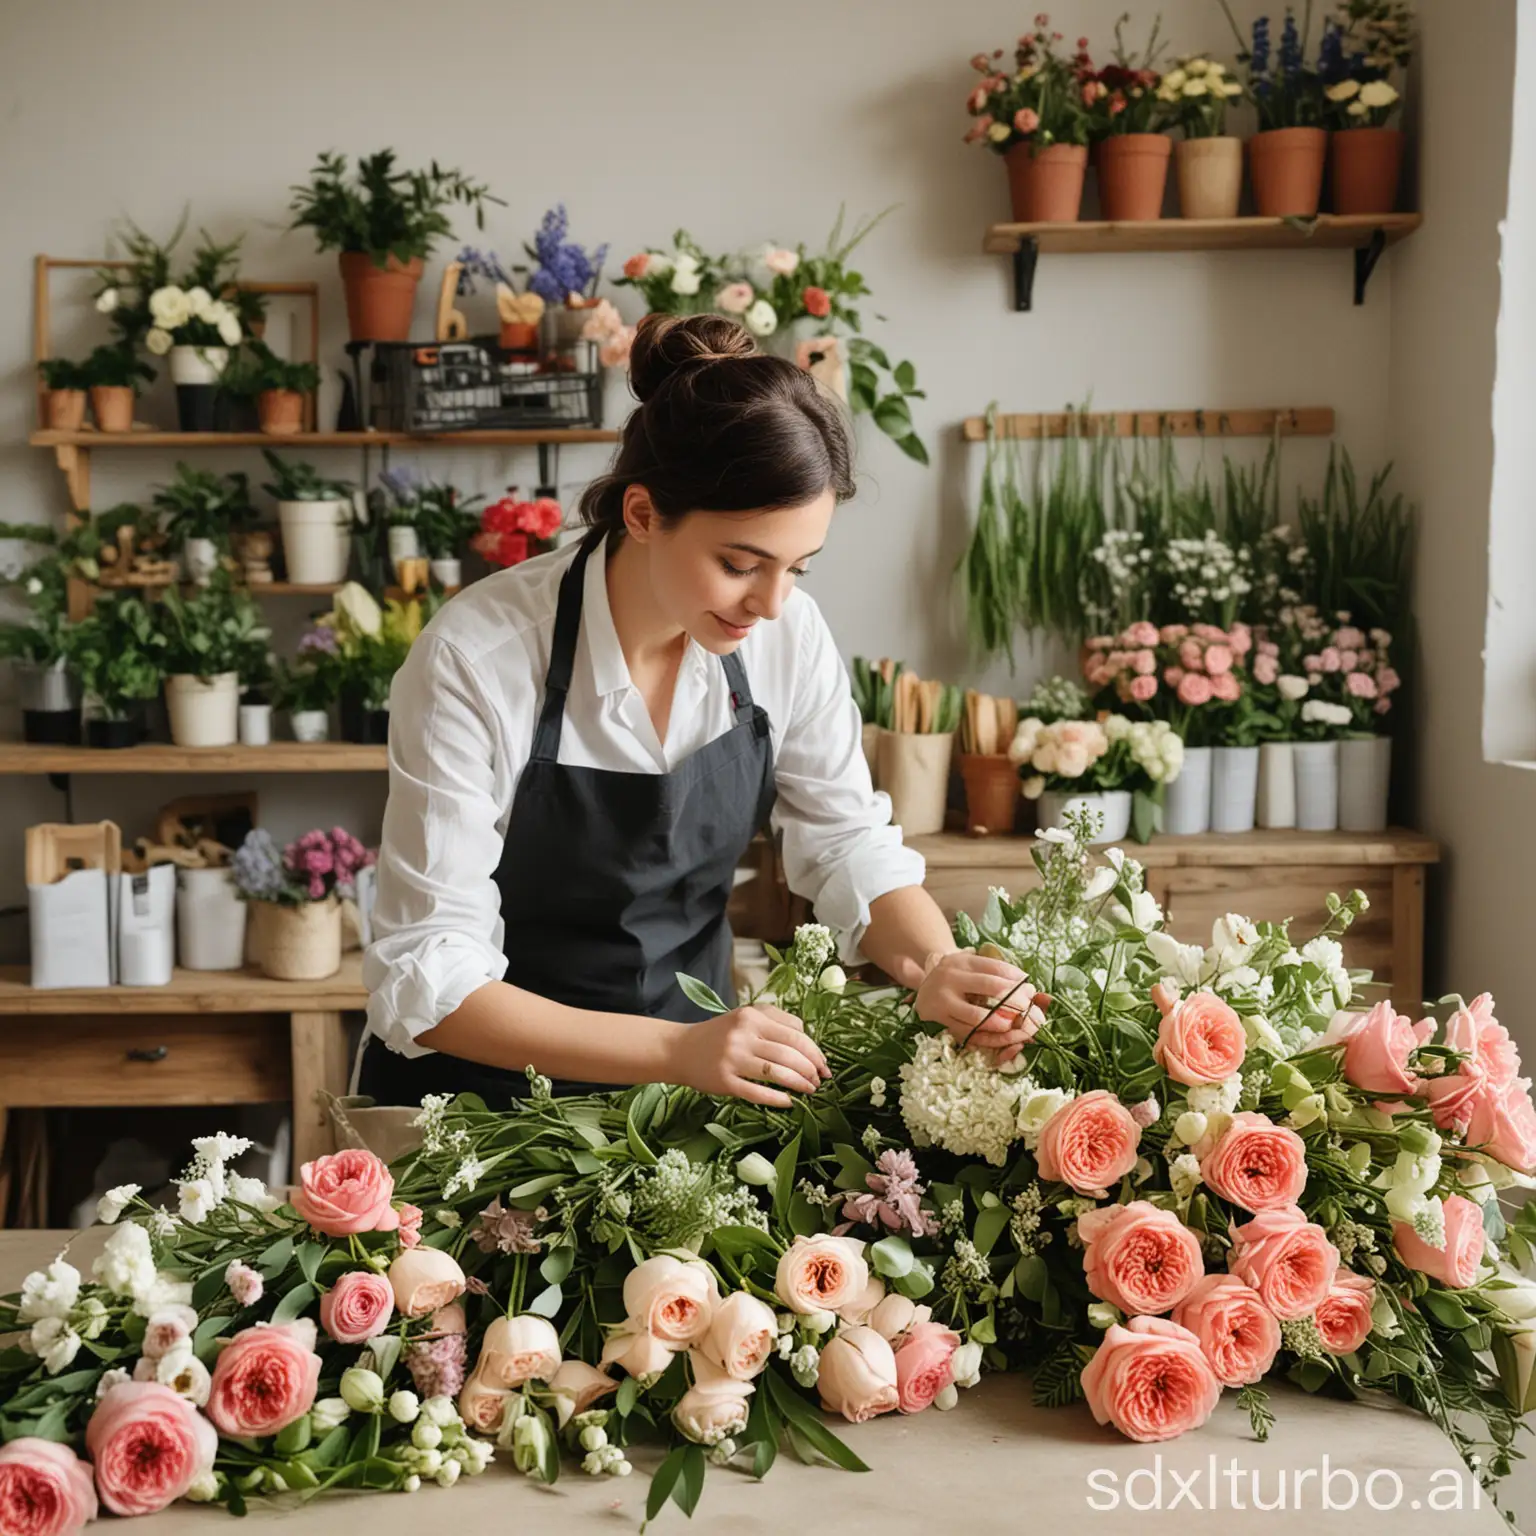 florist arranging flowers